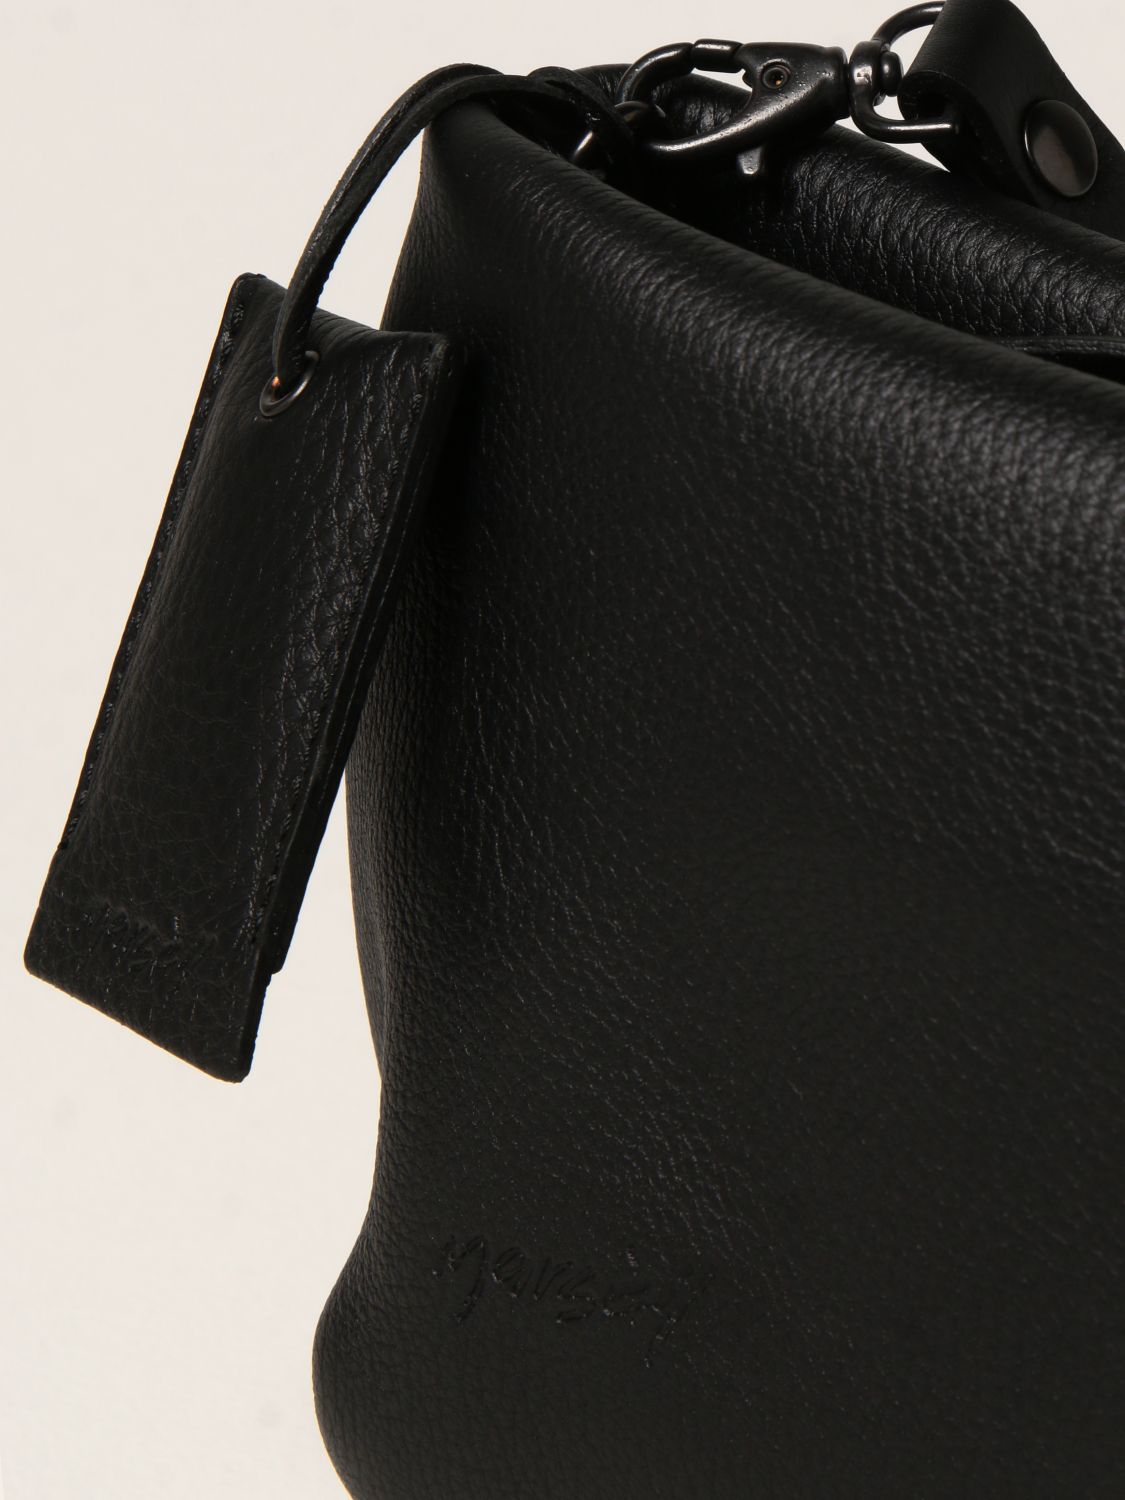 MARSÈLL: Fantasmino bag in dry milled leather - Black | Marsèll mini ...